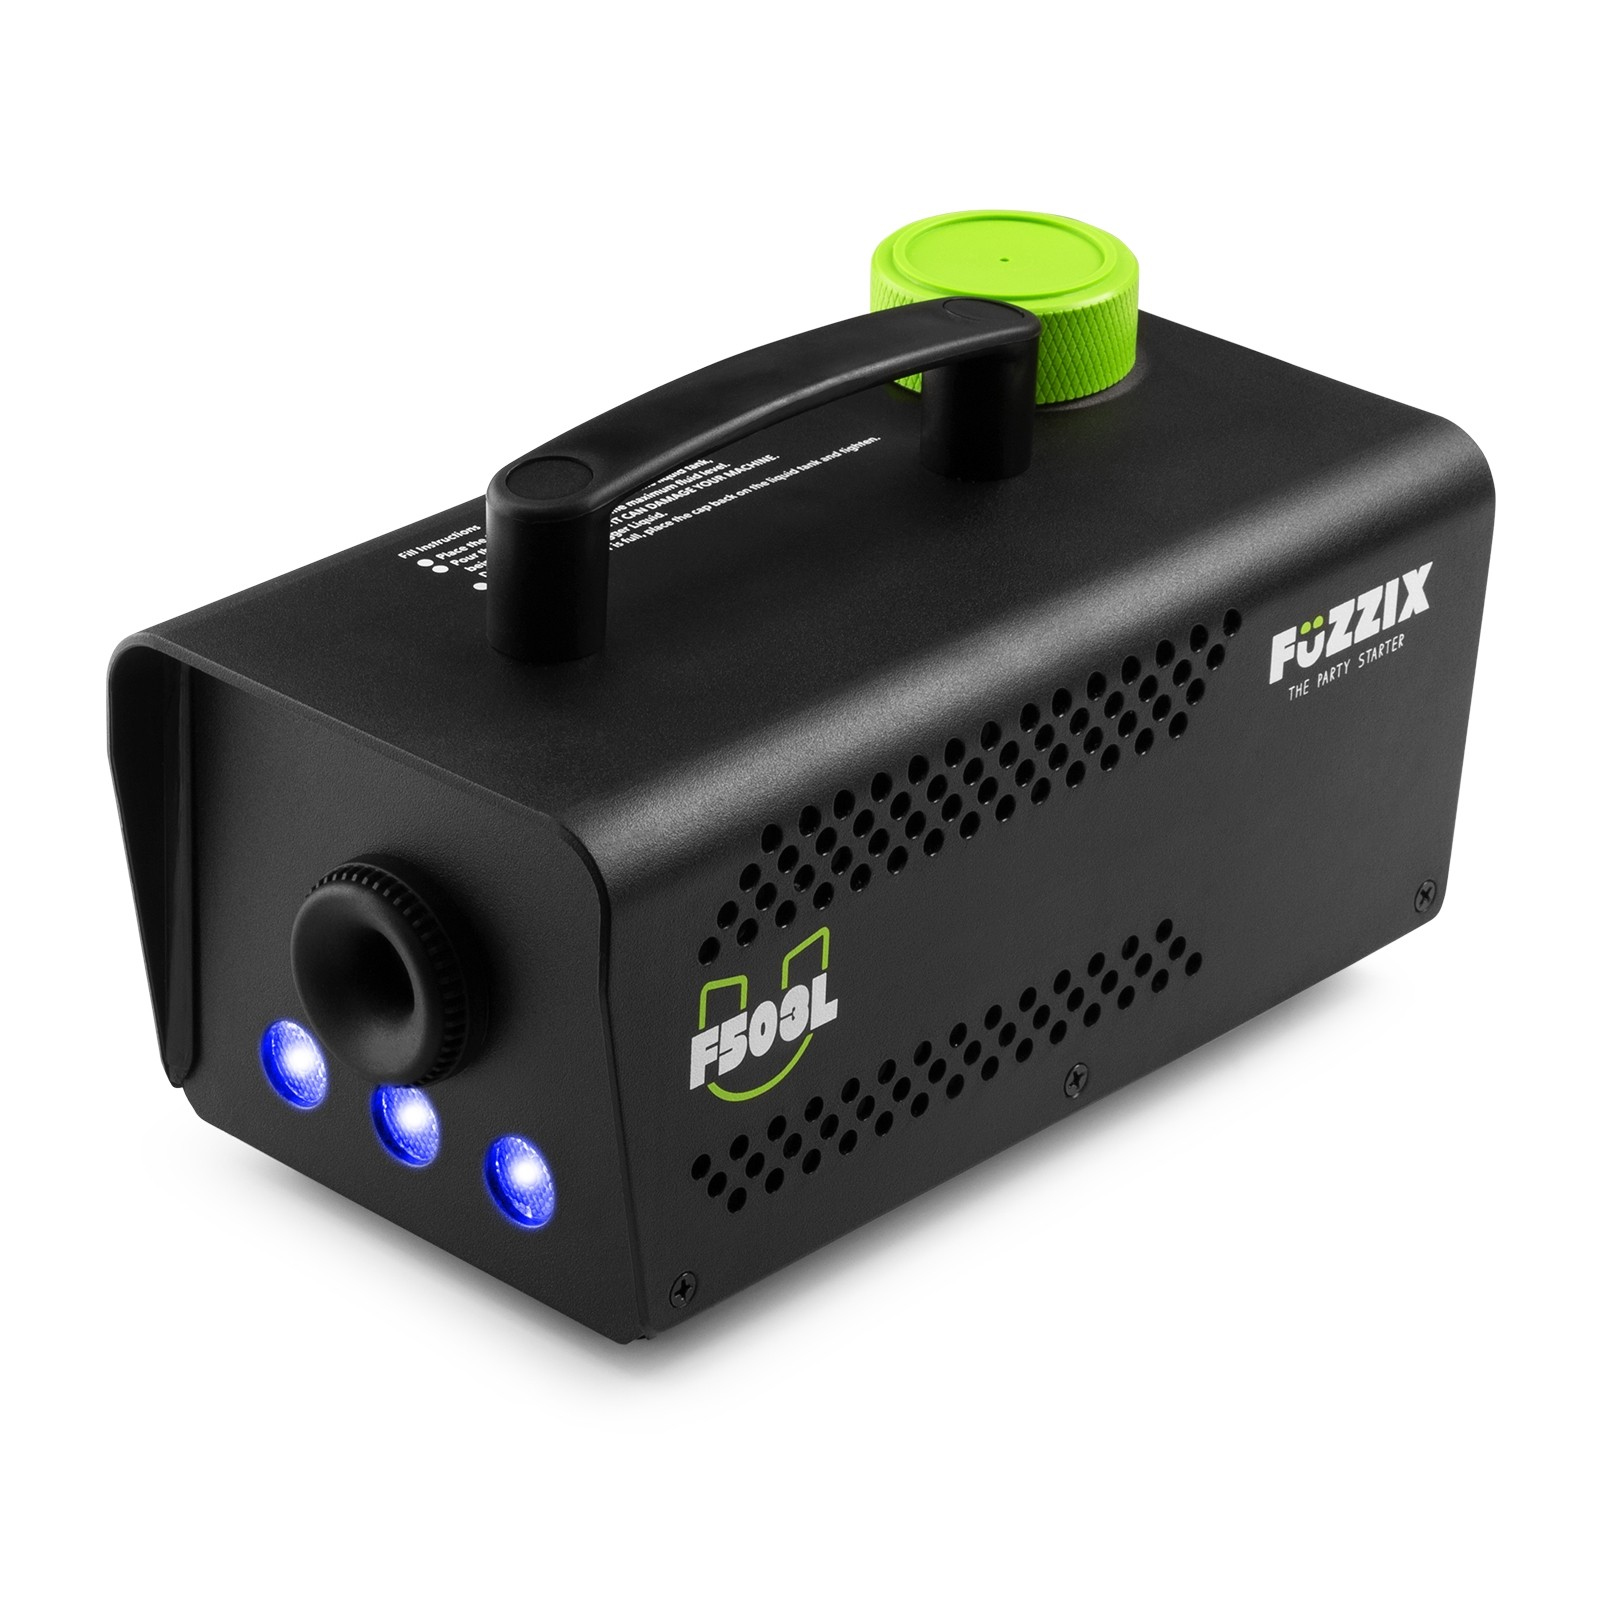 FuZZIX F503L Μηχανή Καπνού 500 Watt Party Smoke Machine με Ασύρματο χειριστήριο, 3 RGB LEDs και Υγρό 160.307